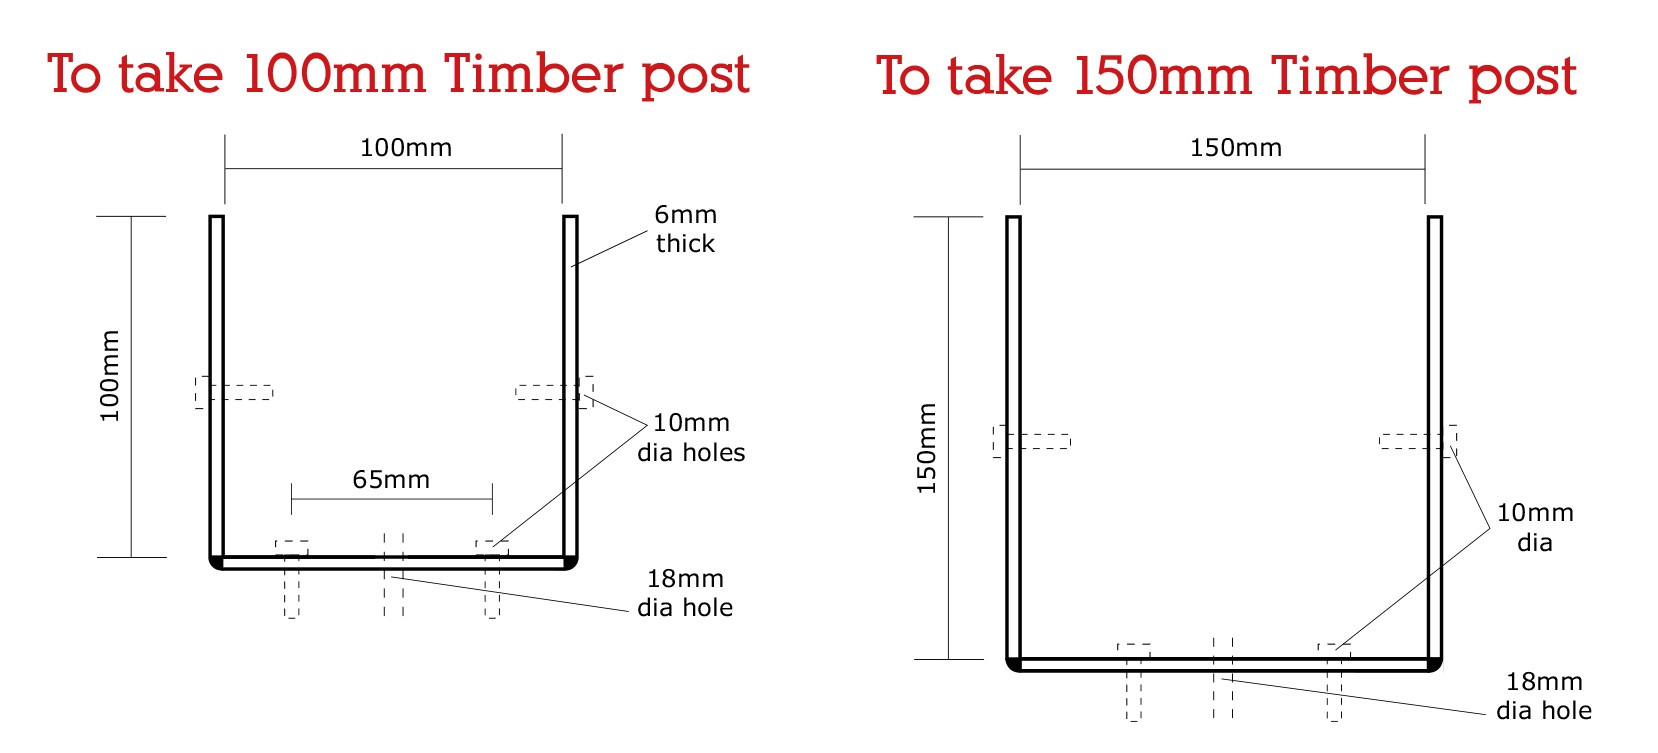 Timber Post Type 1 Diagram